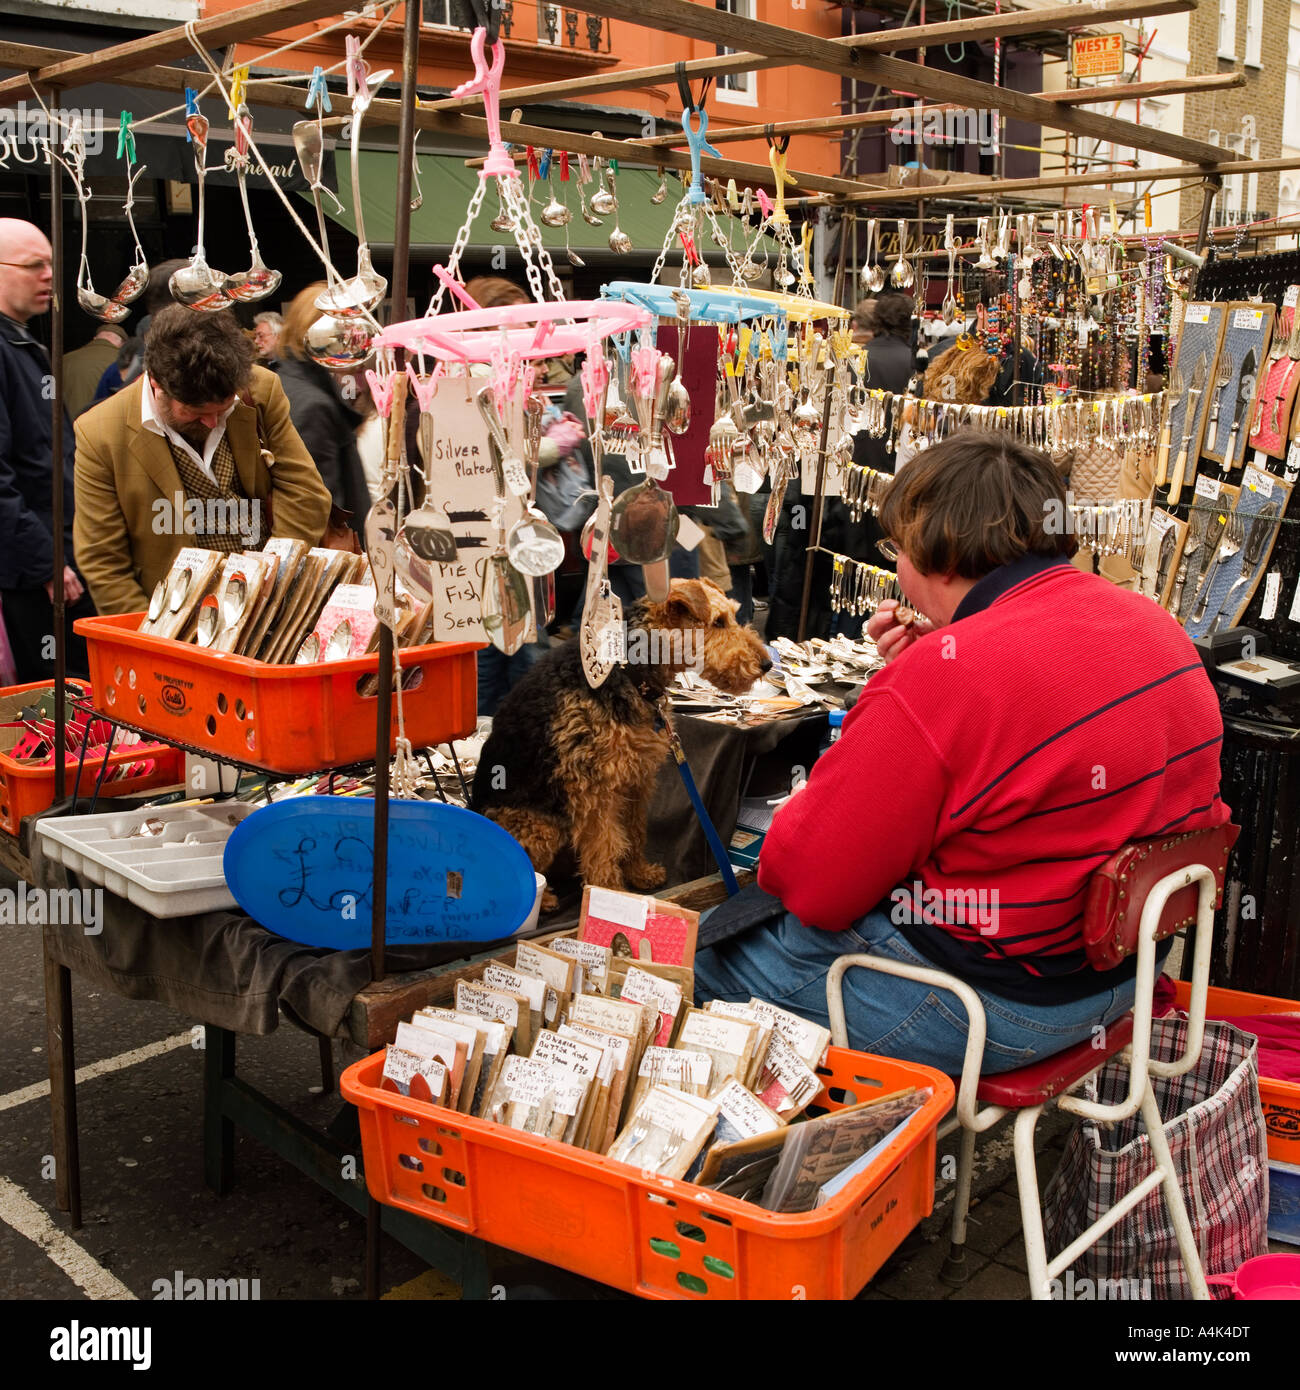 Portobello Road Market Foto de stock